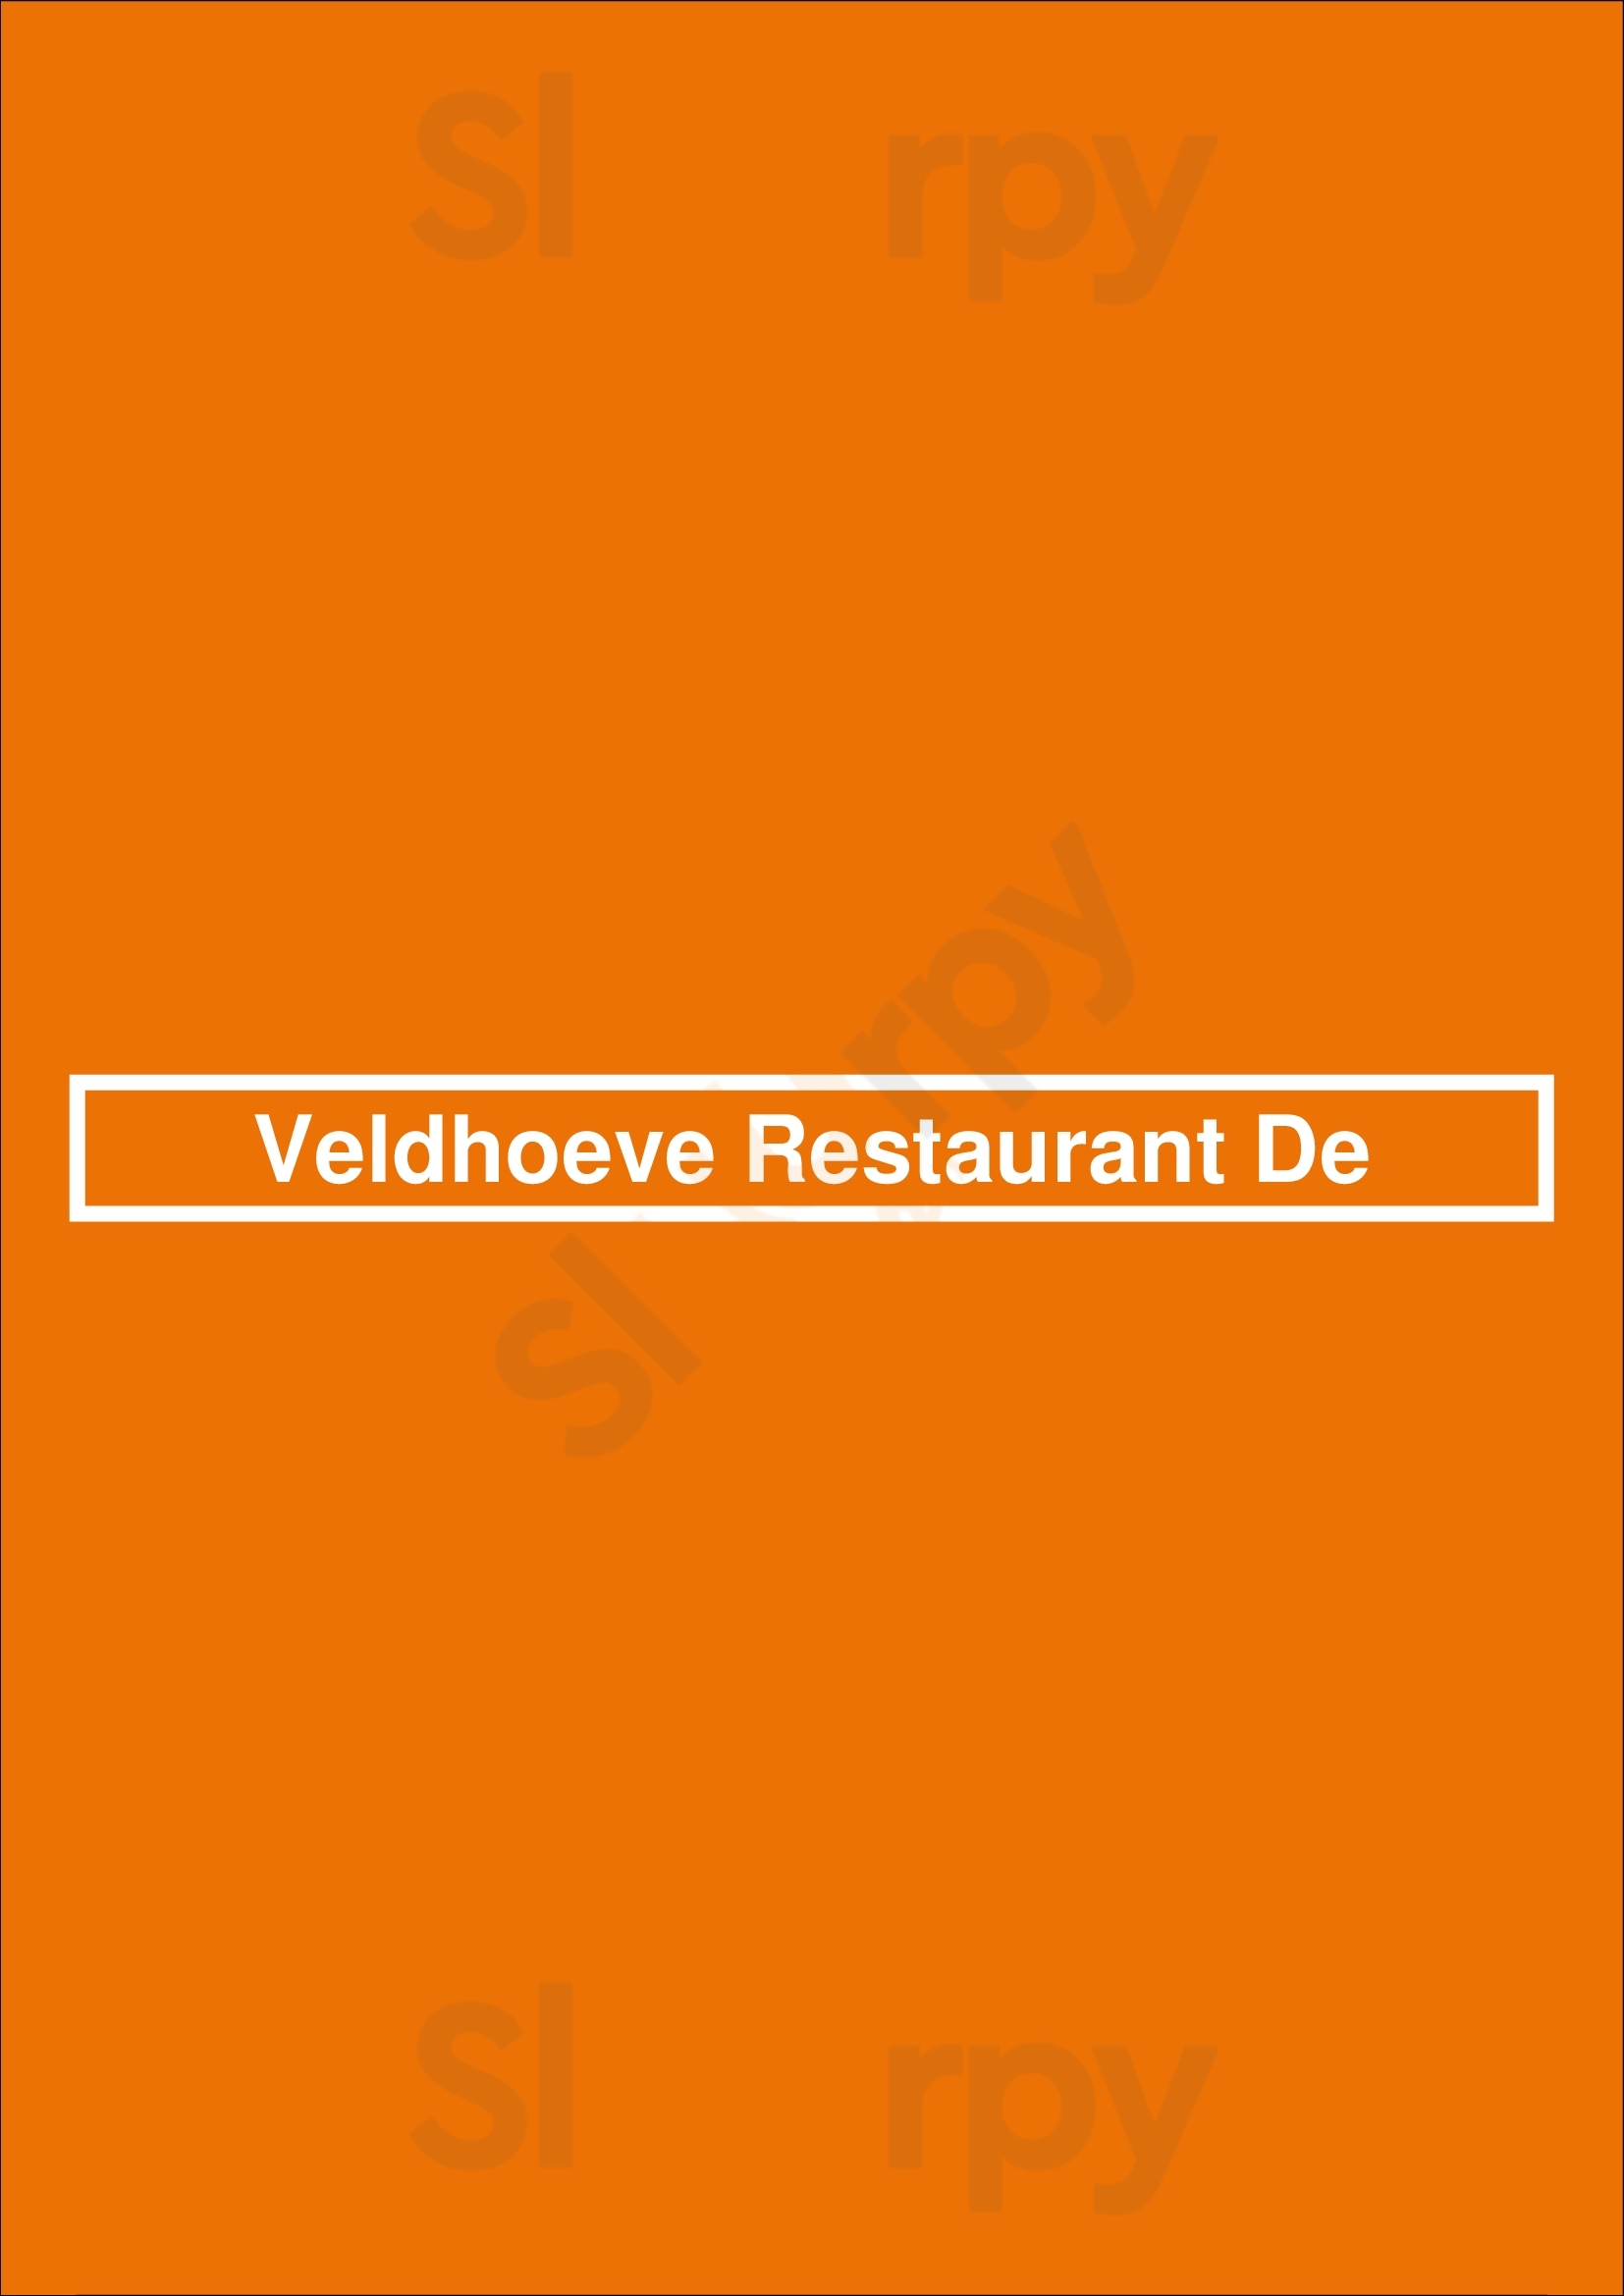 Veldhoeve Restaurant De Epe Menu - 1